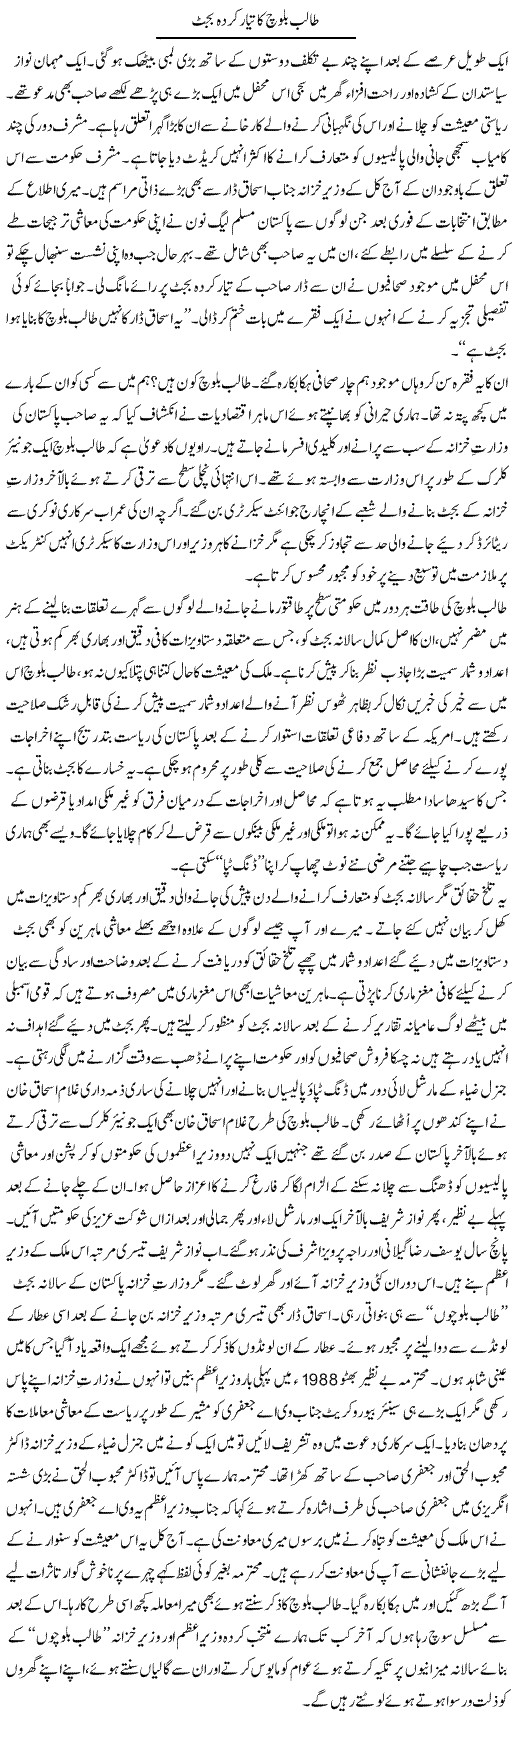 Talib Baloach Ka Tayar Karda Budget | Nusrat Javed | Daily Urdu Columns